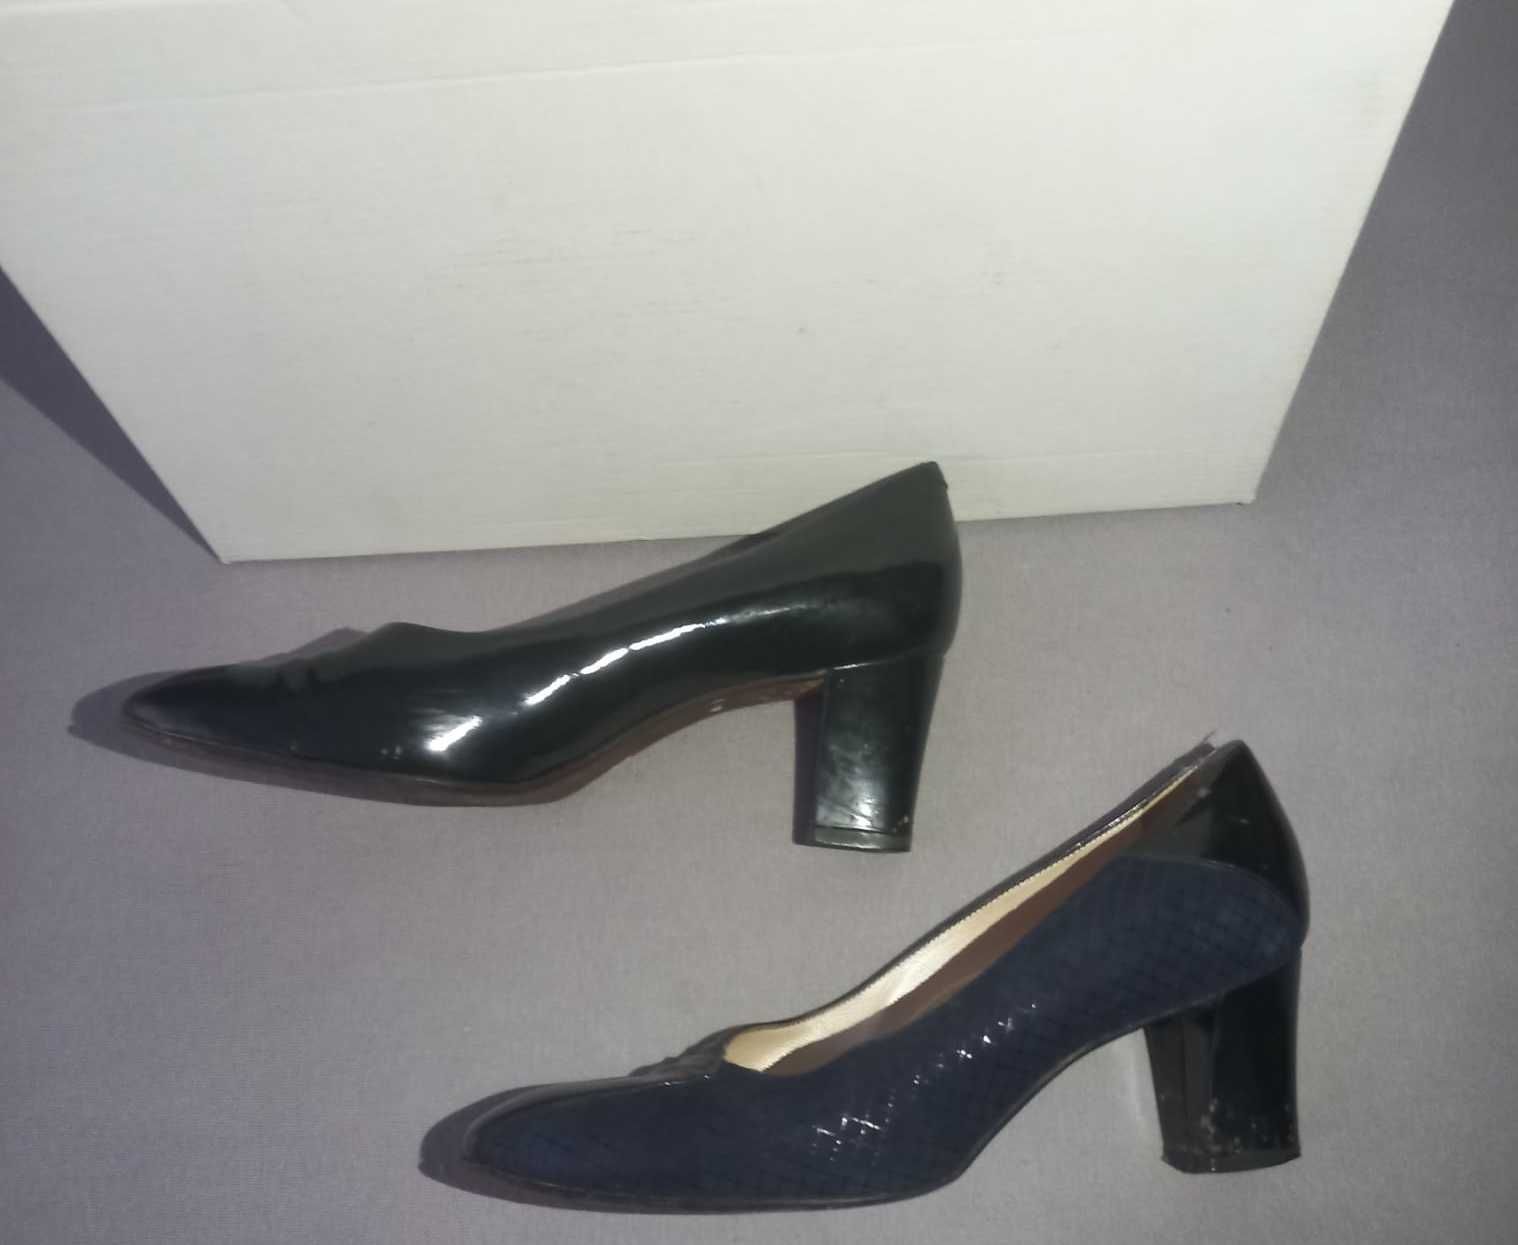 Pantofi pentru femei Mauro Teci, eleganti, negri, marimea 37 Ieftini!